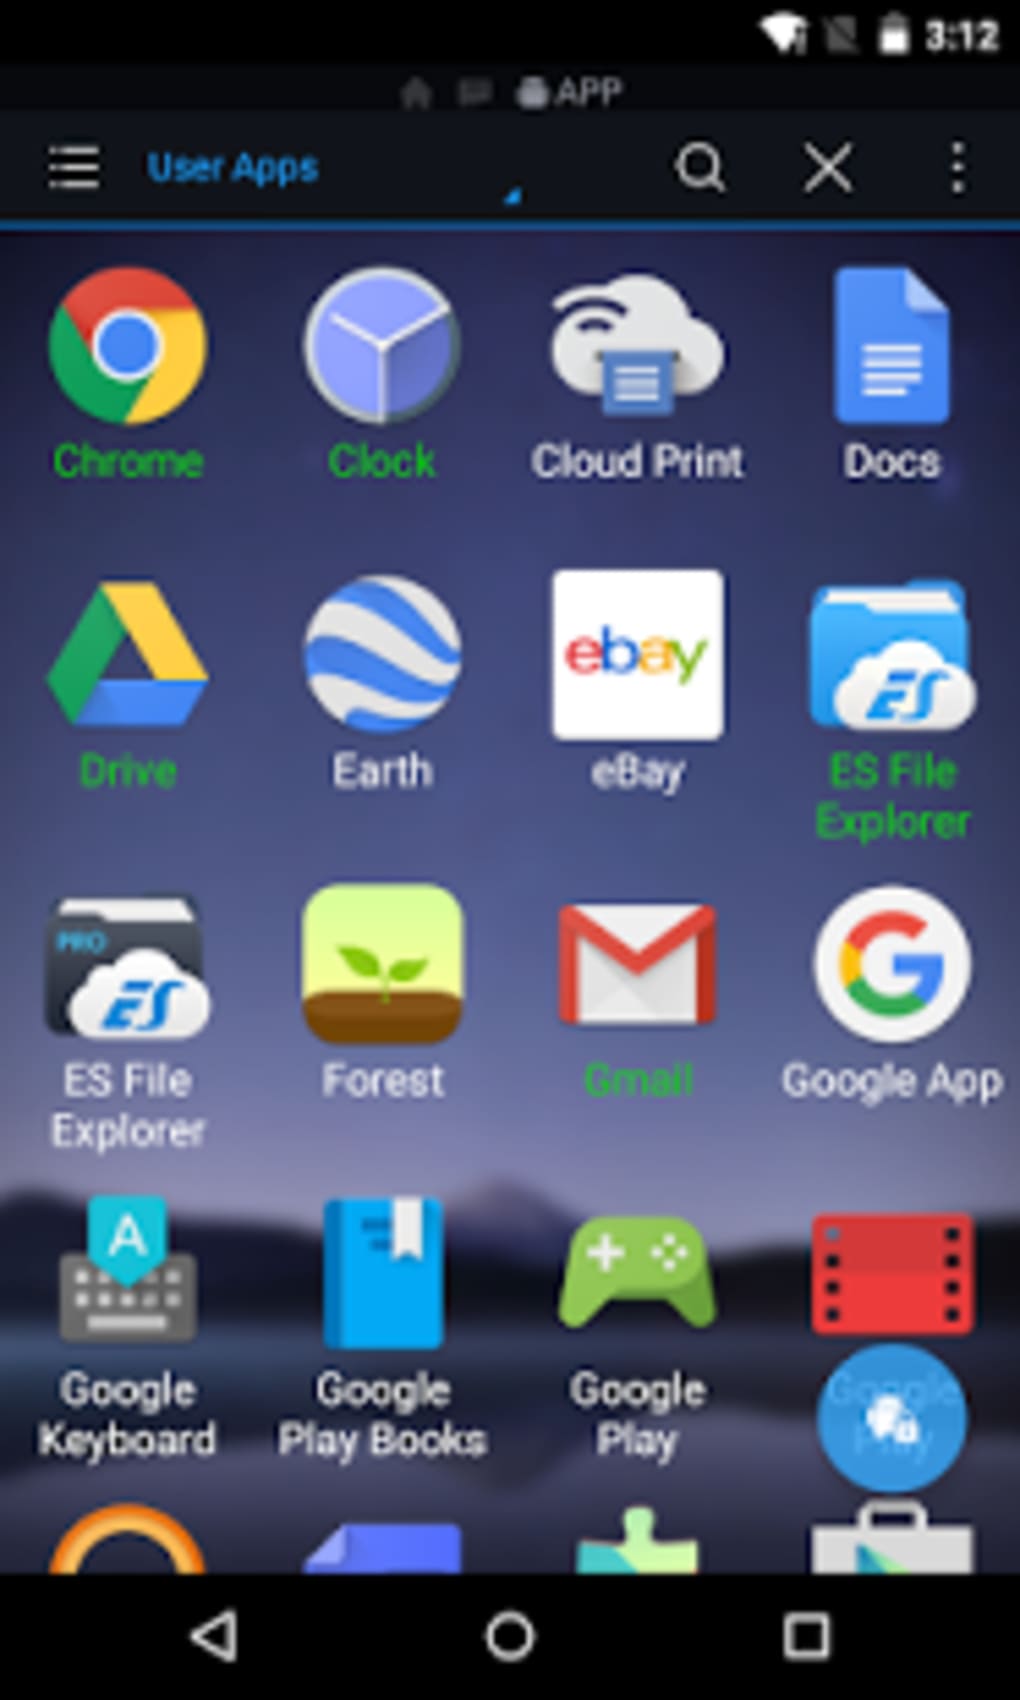 iphone explorer free download windows